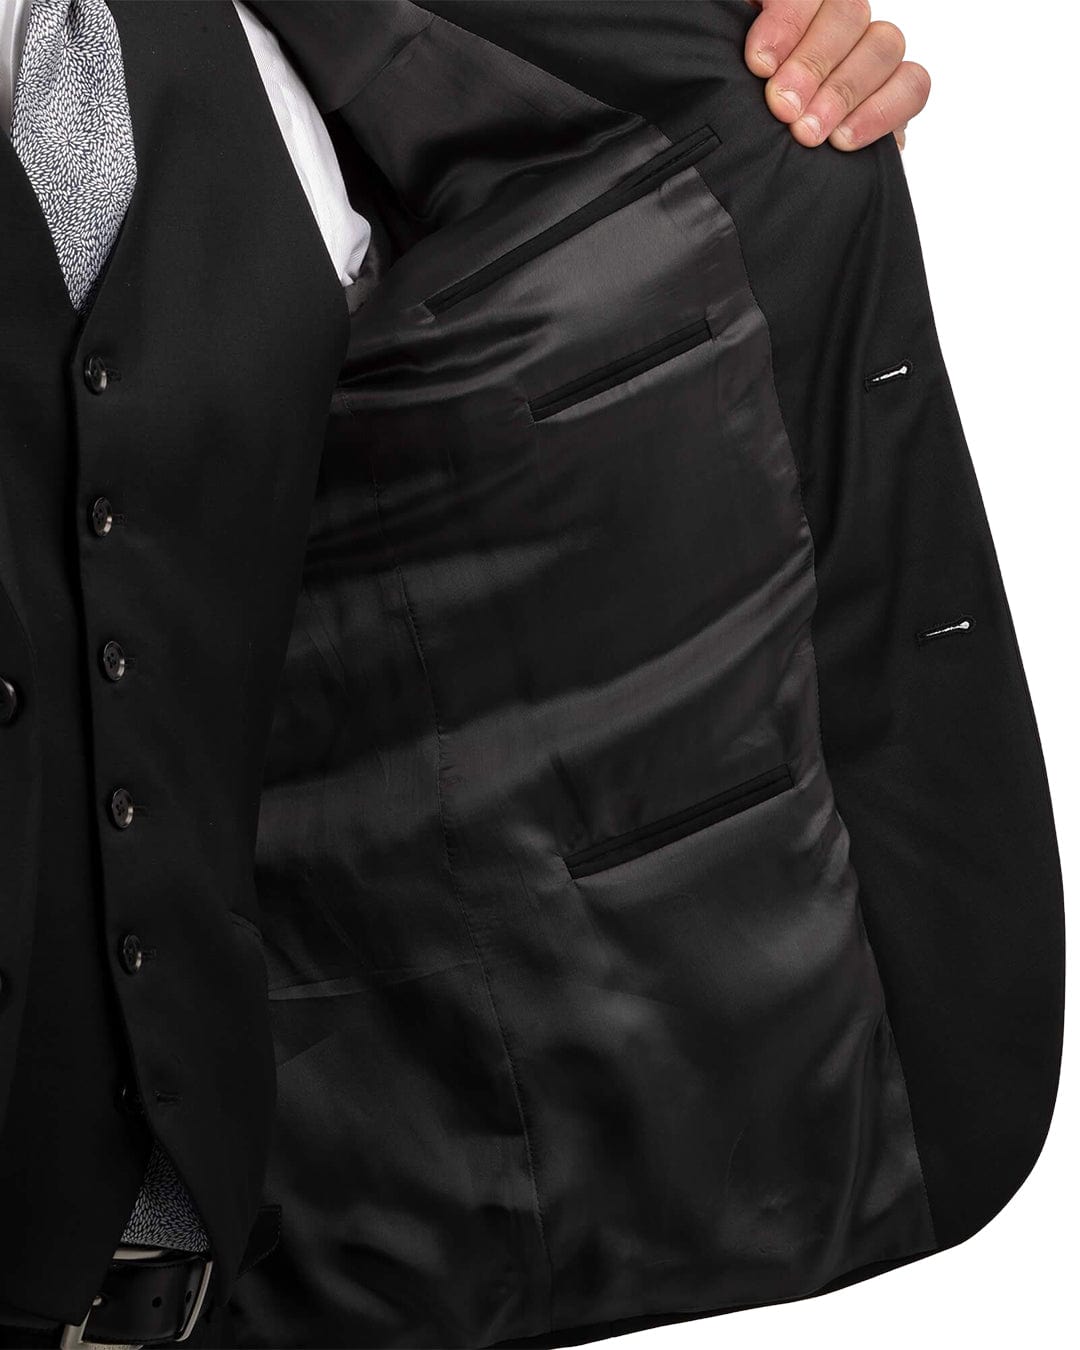 Lanificio F.lli Cerruti Black Suit Jacket